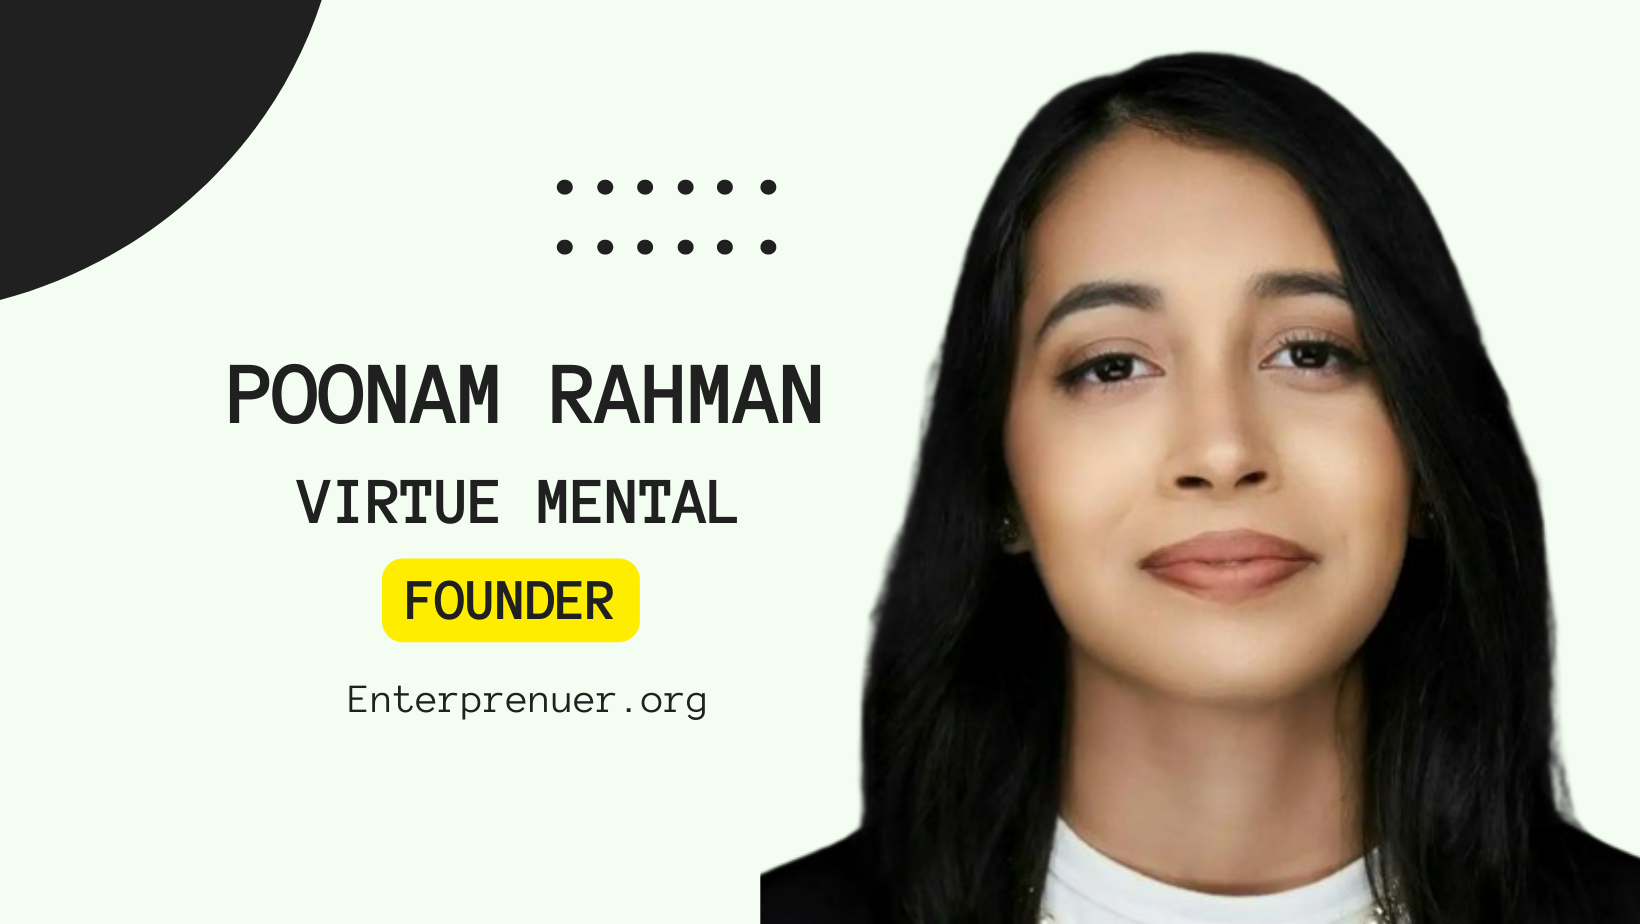 Poonam Rahman Founder of Virtue Mental